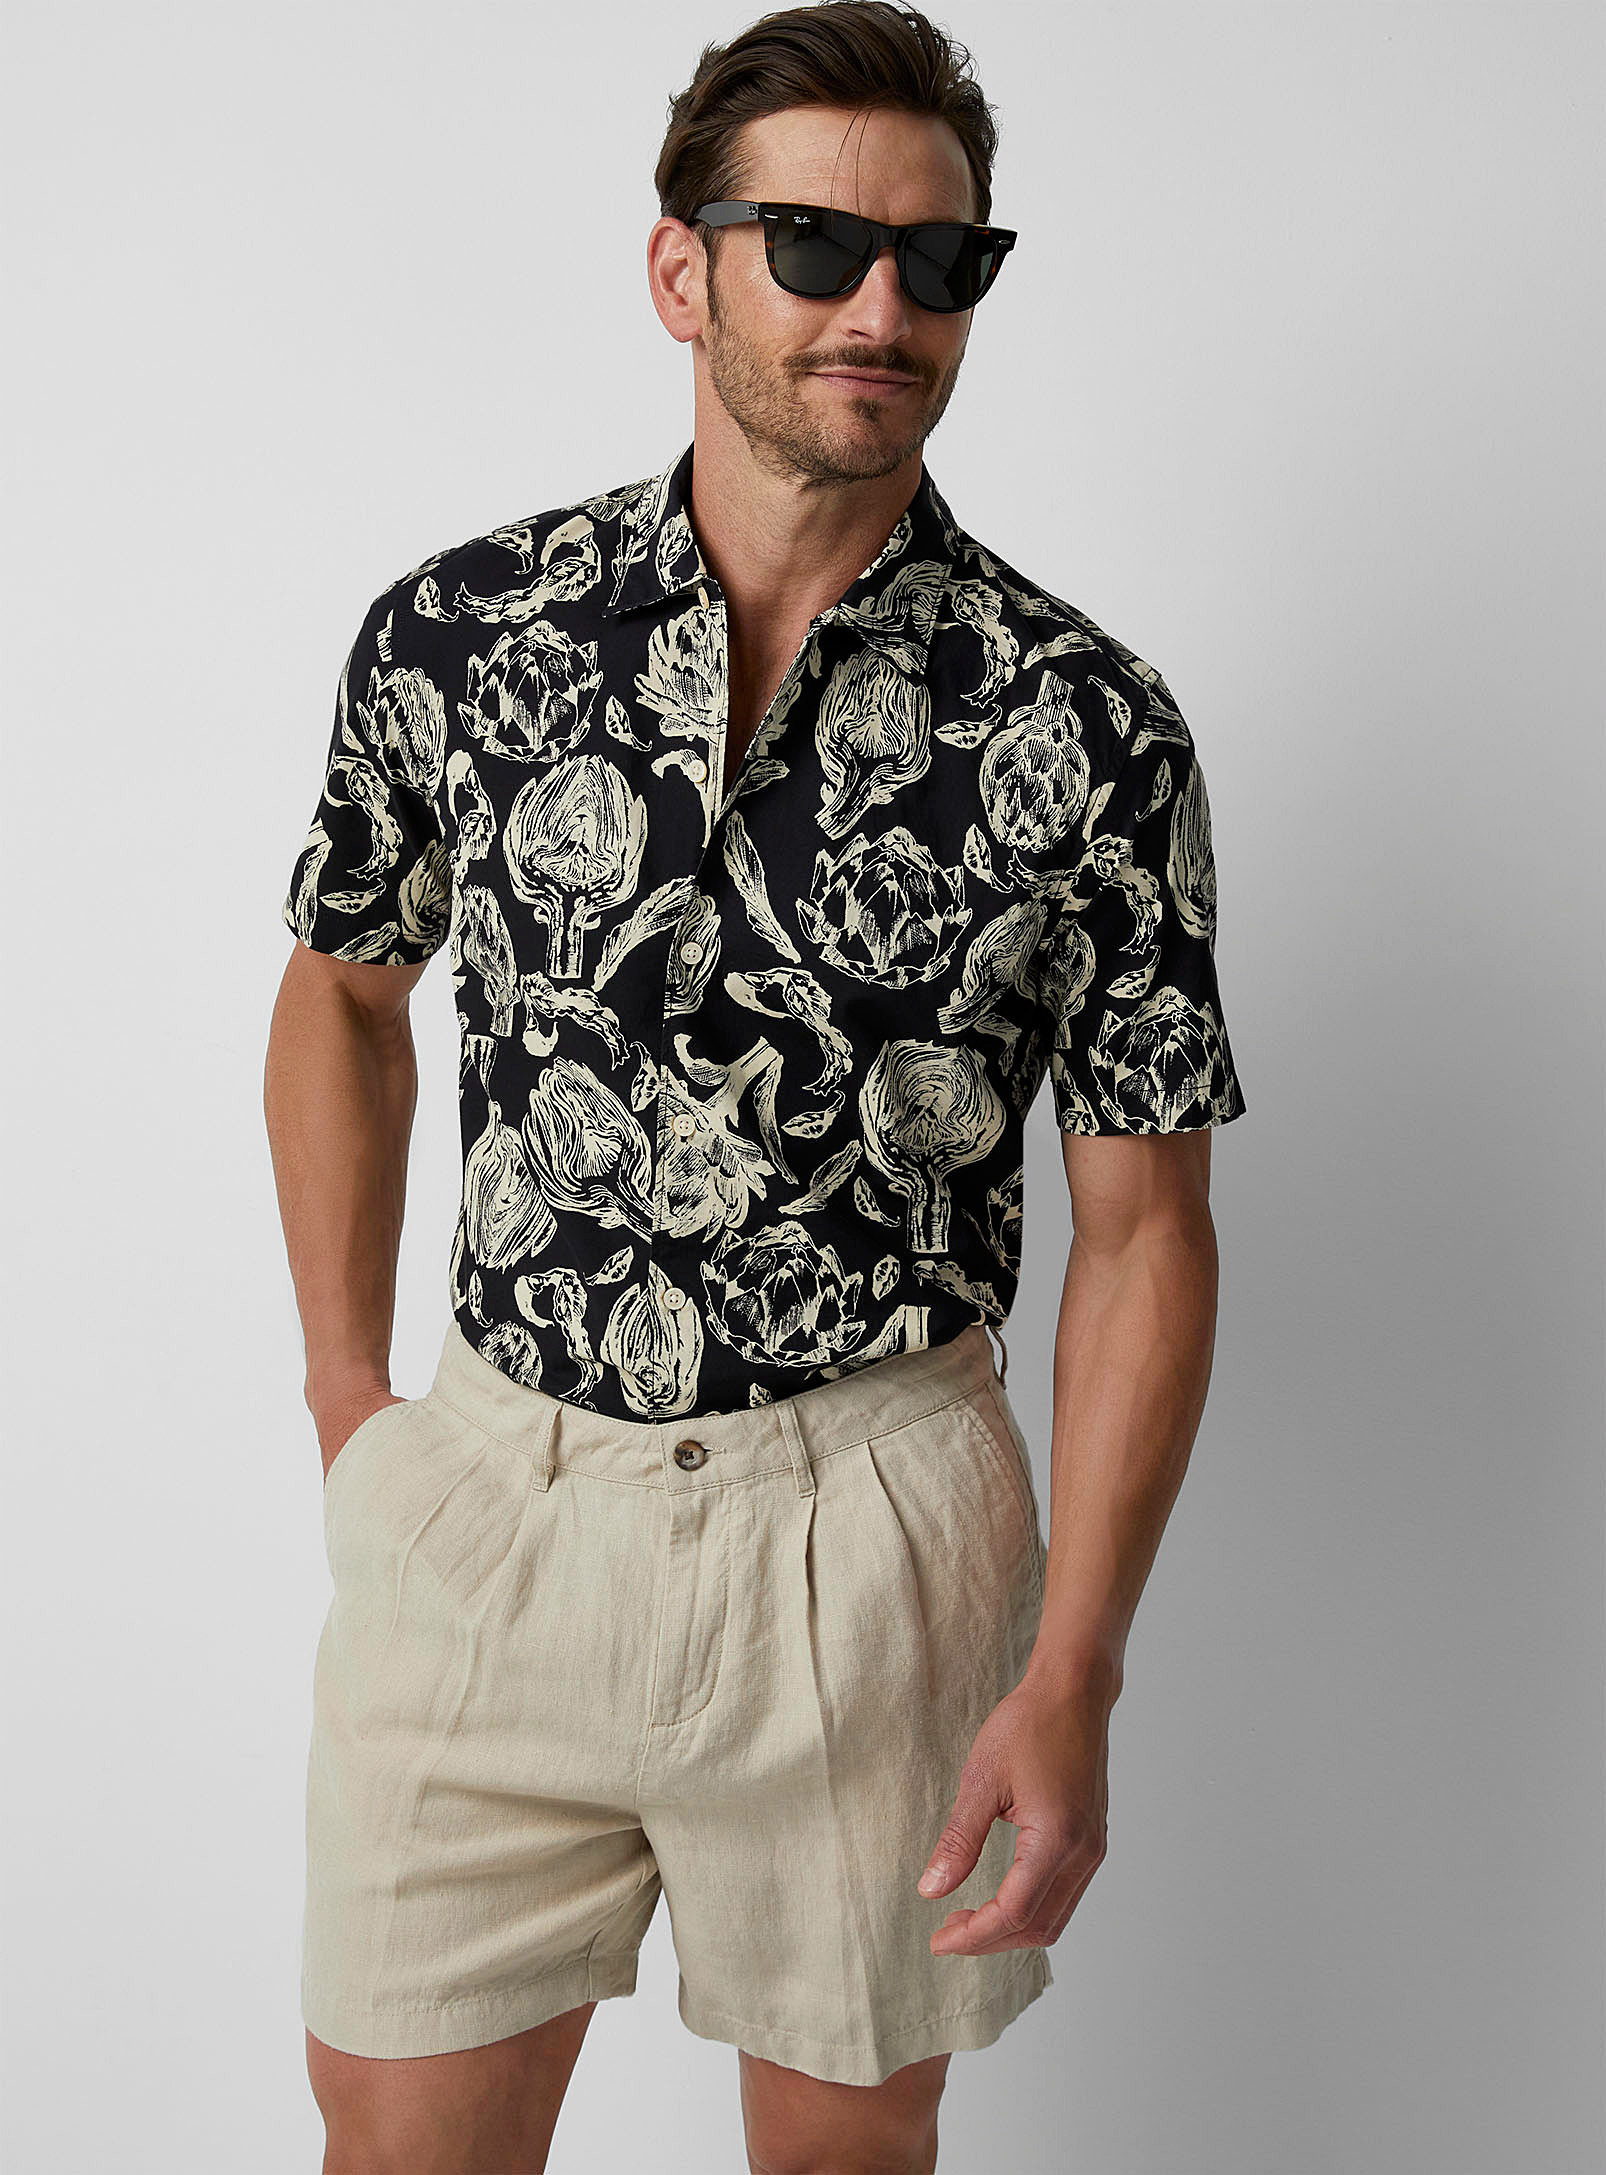 Marc O'Polo - La chemise fleurs en contraste